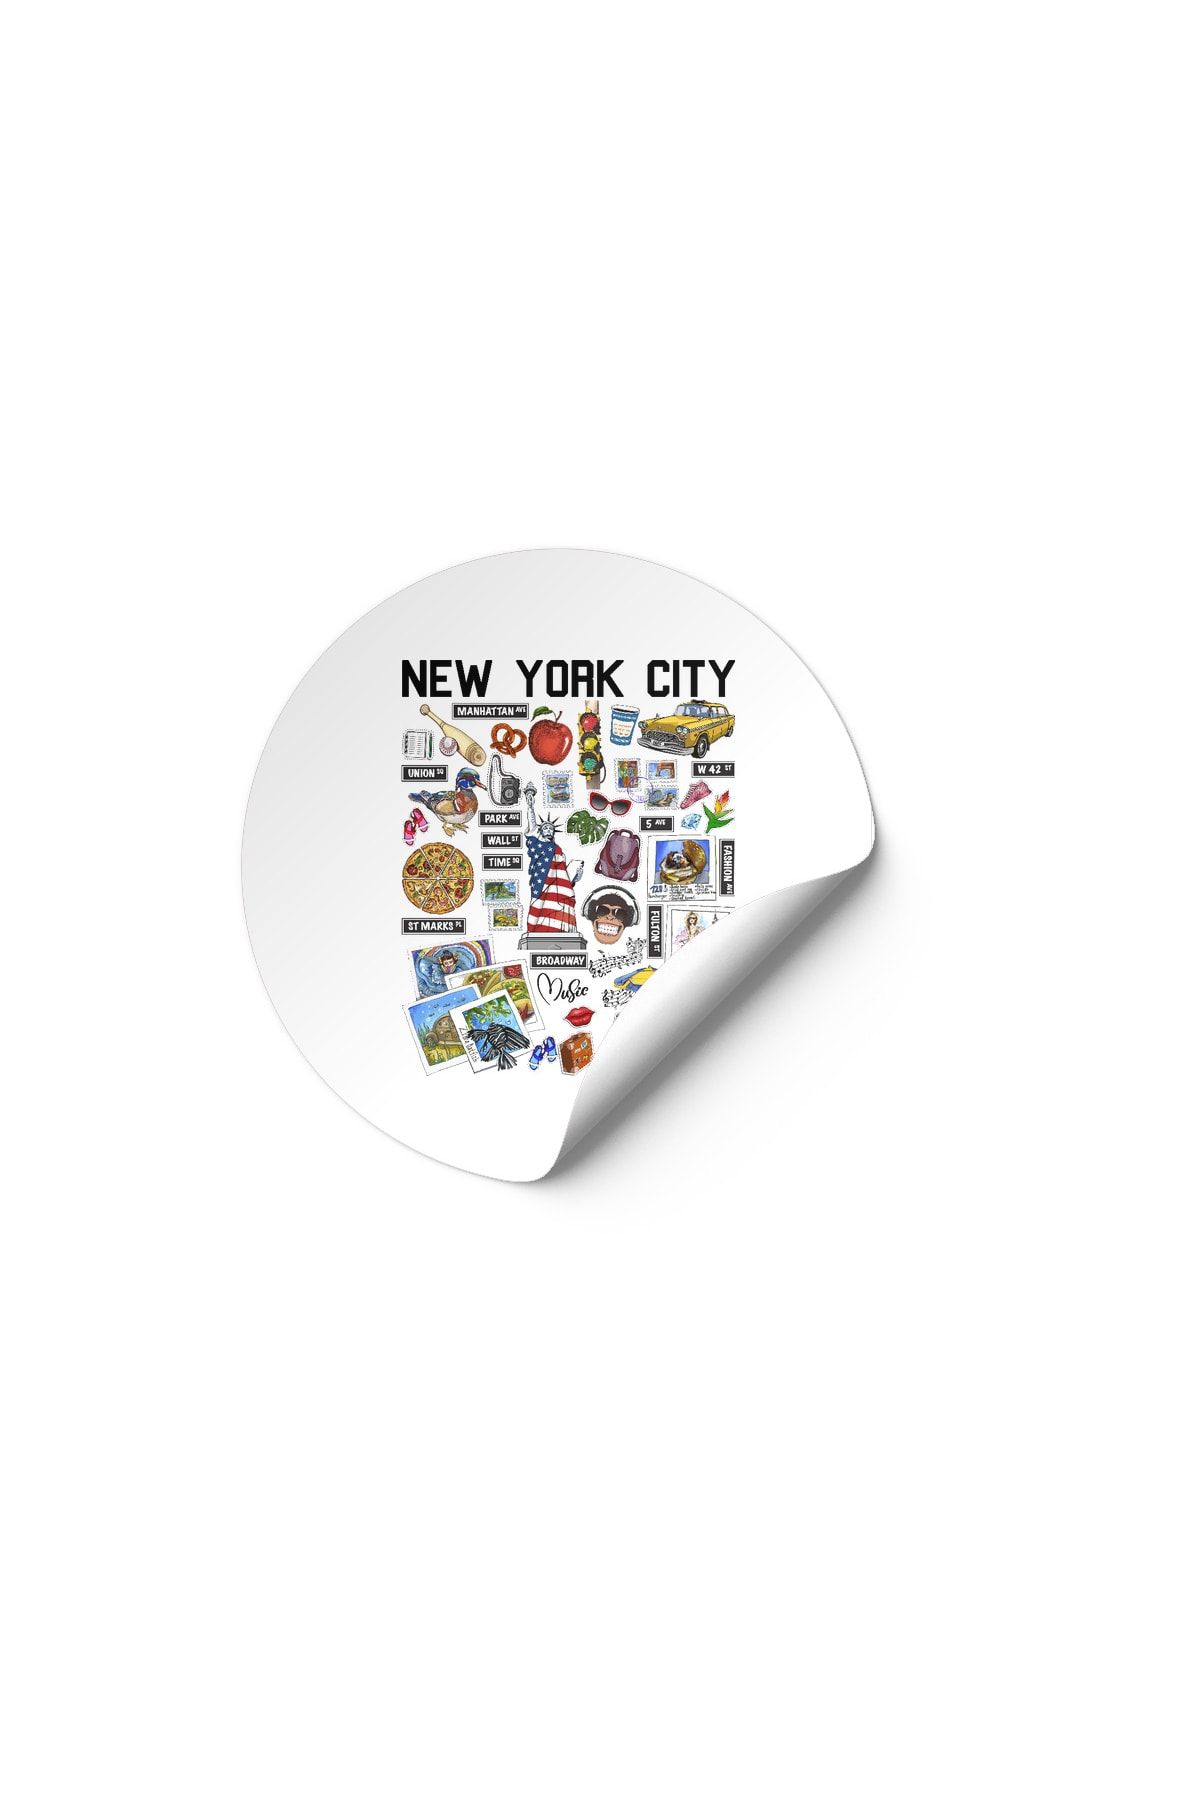 Fizello Nyc New York City Travel Graphic Tee Shirt Sticker